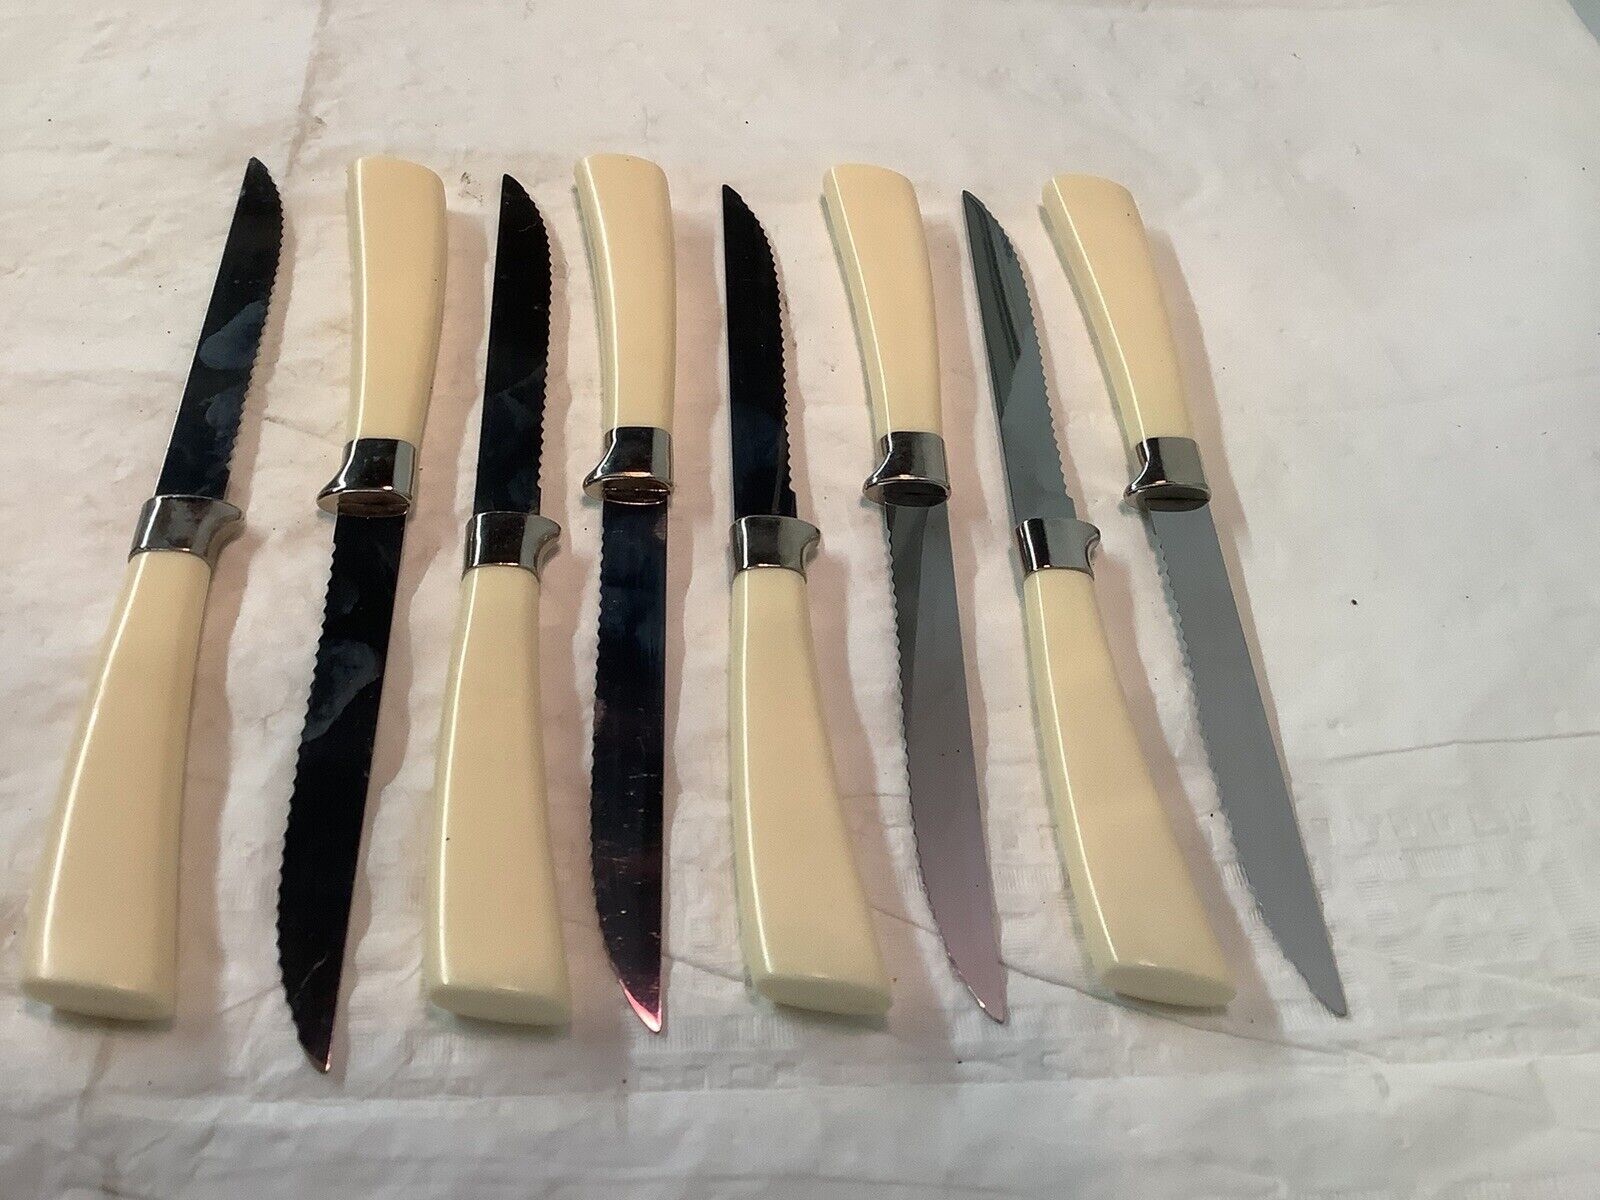 VTG Forgecraft Serrated Steak Knives Set Of 8 Stainless/Bakelite USA Made